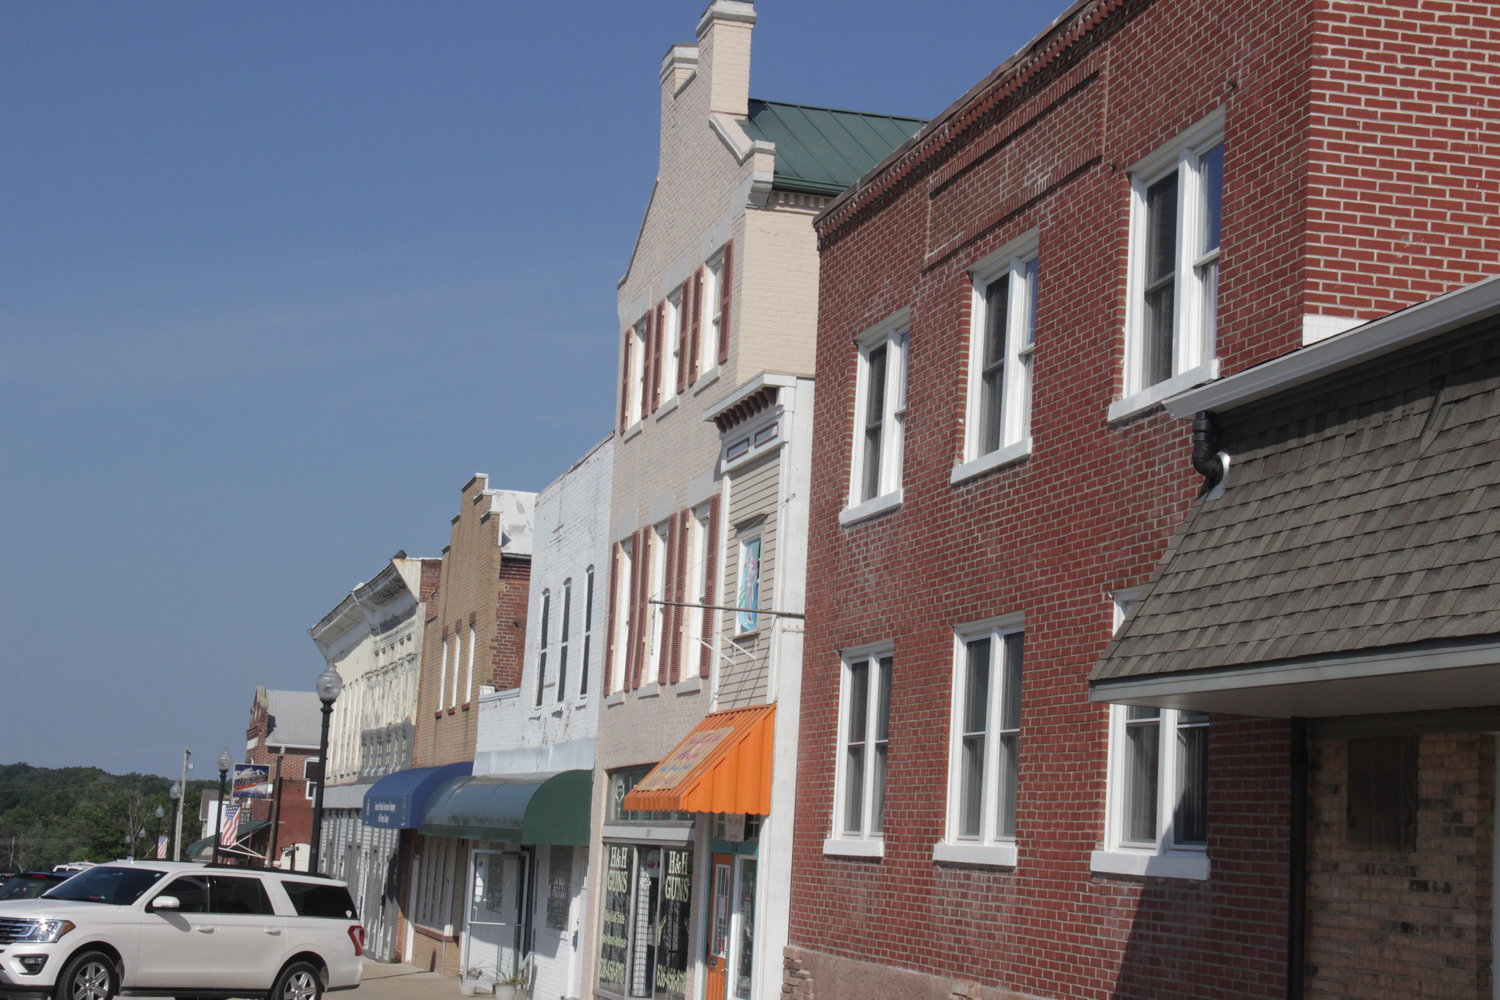 Historical buildings on Main Street in downtown Warrenton.